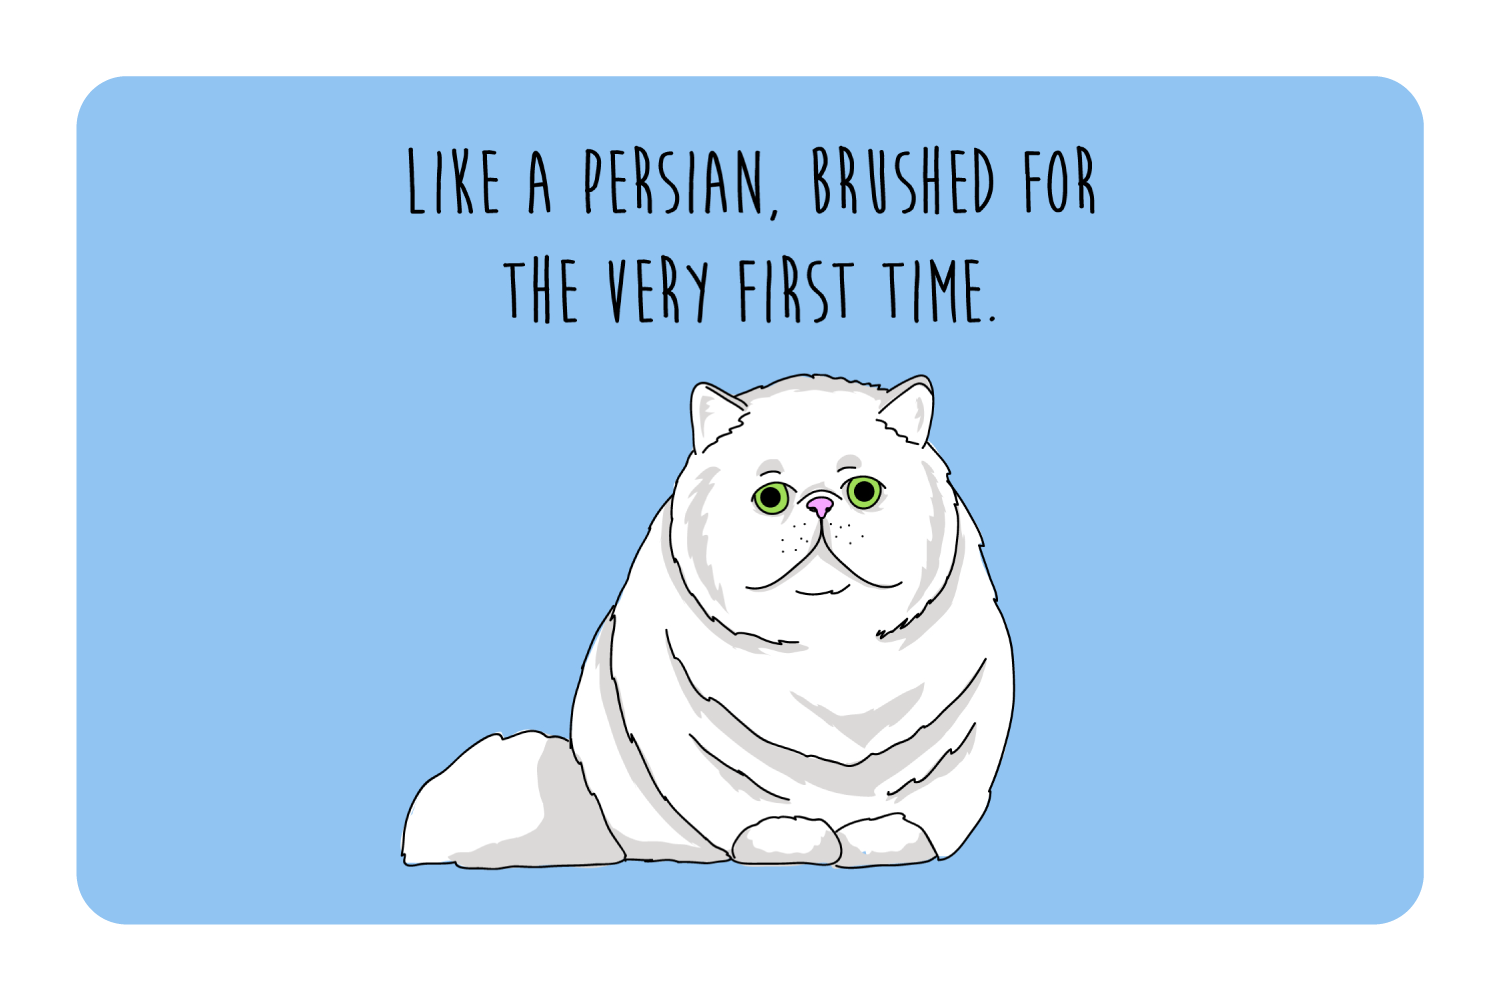 Like a Persian